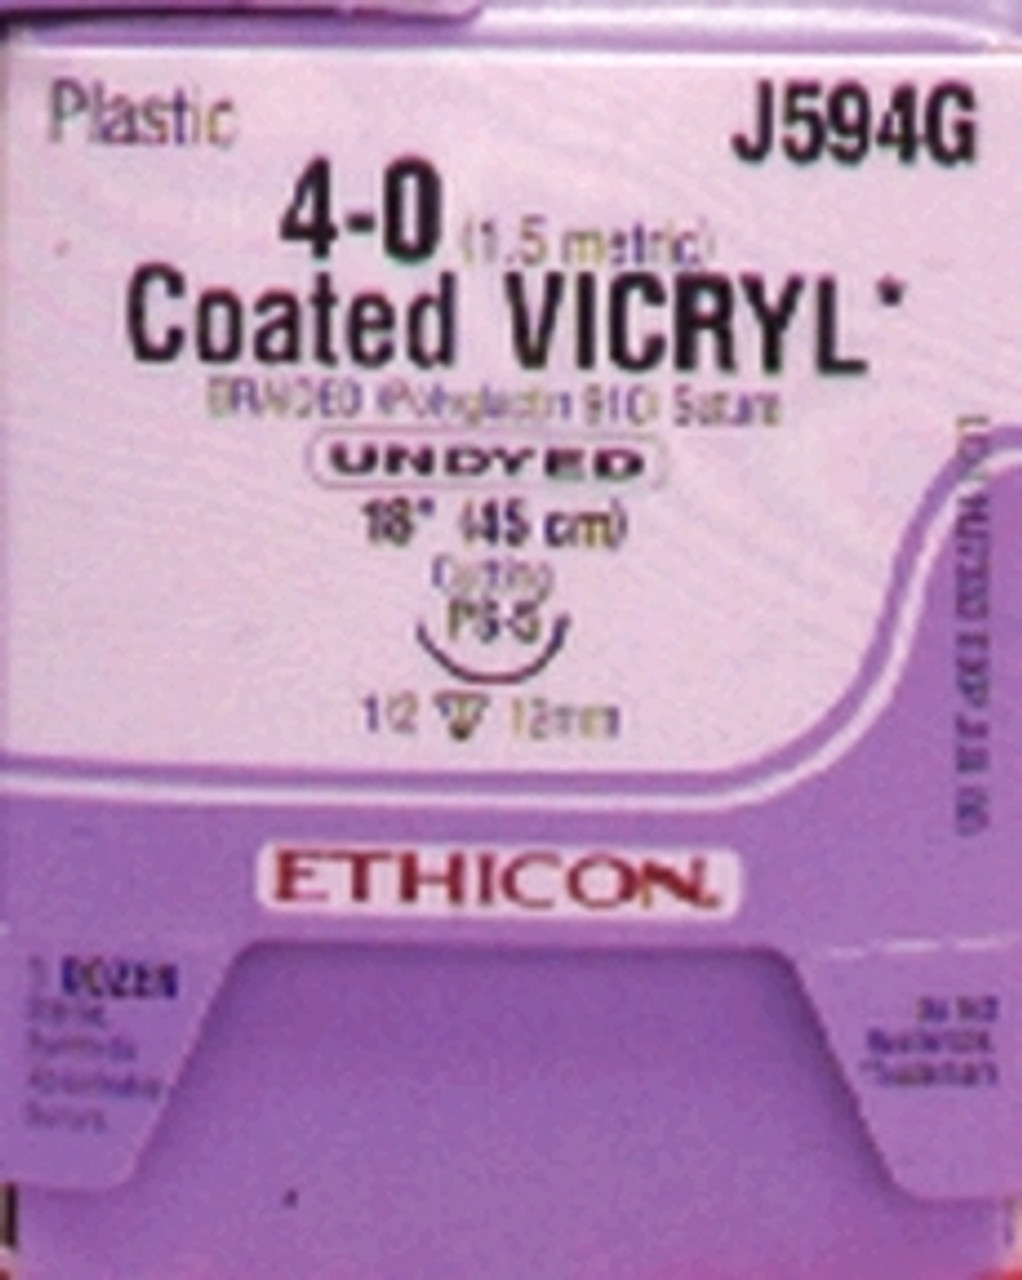 ETHICON VICRYL (POLYGLACTIN 910) SUTURES, J495G